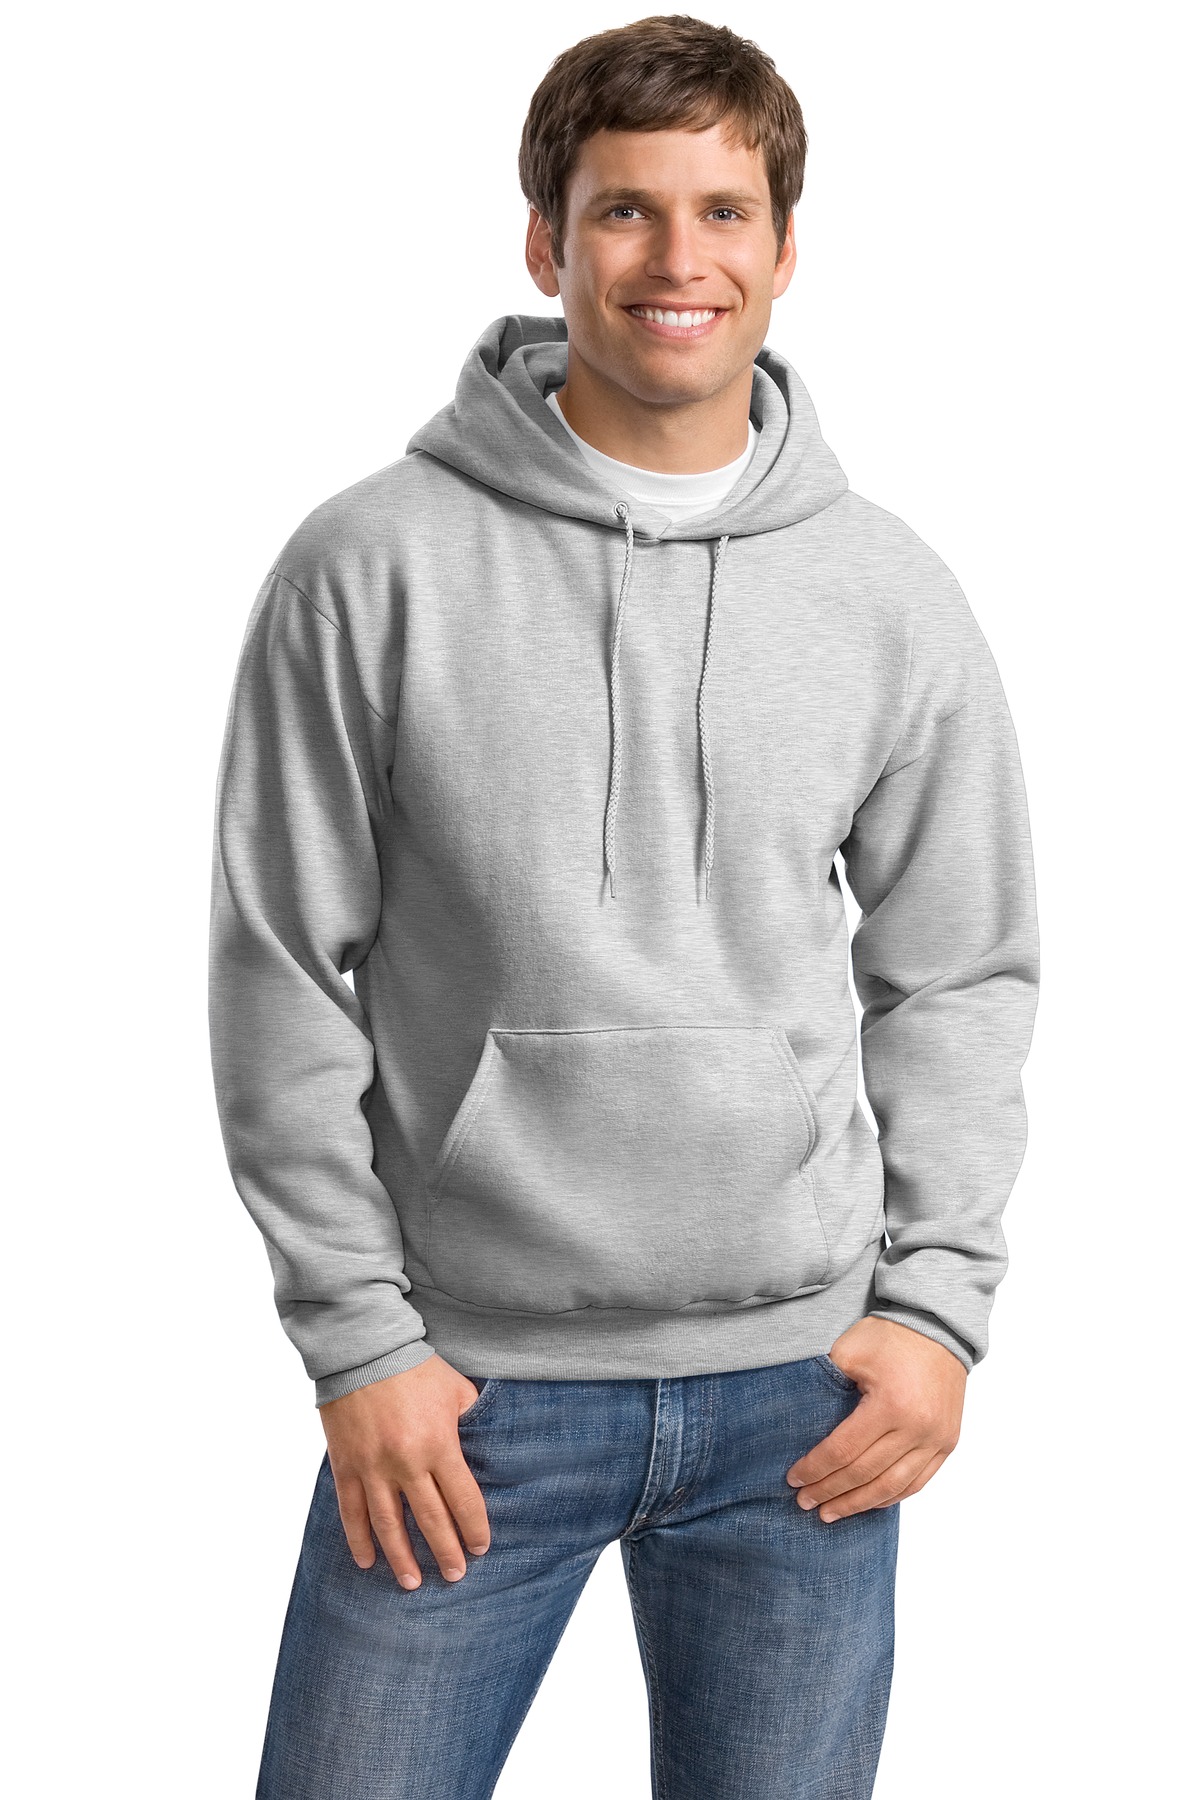 P170 – Hanes EcoSmart – Pullover Hooded Sweatshirt – Safari Sun